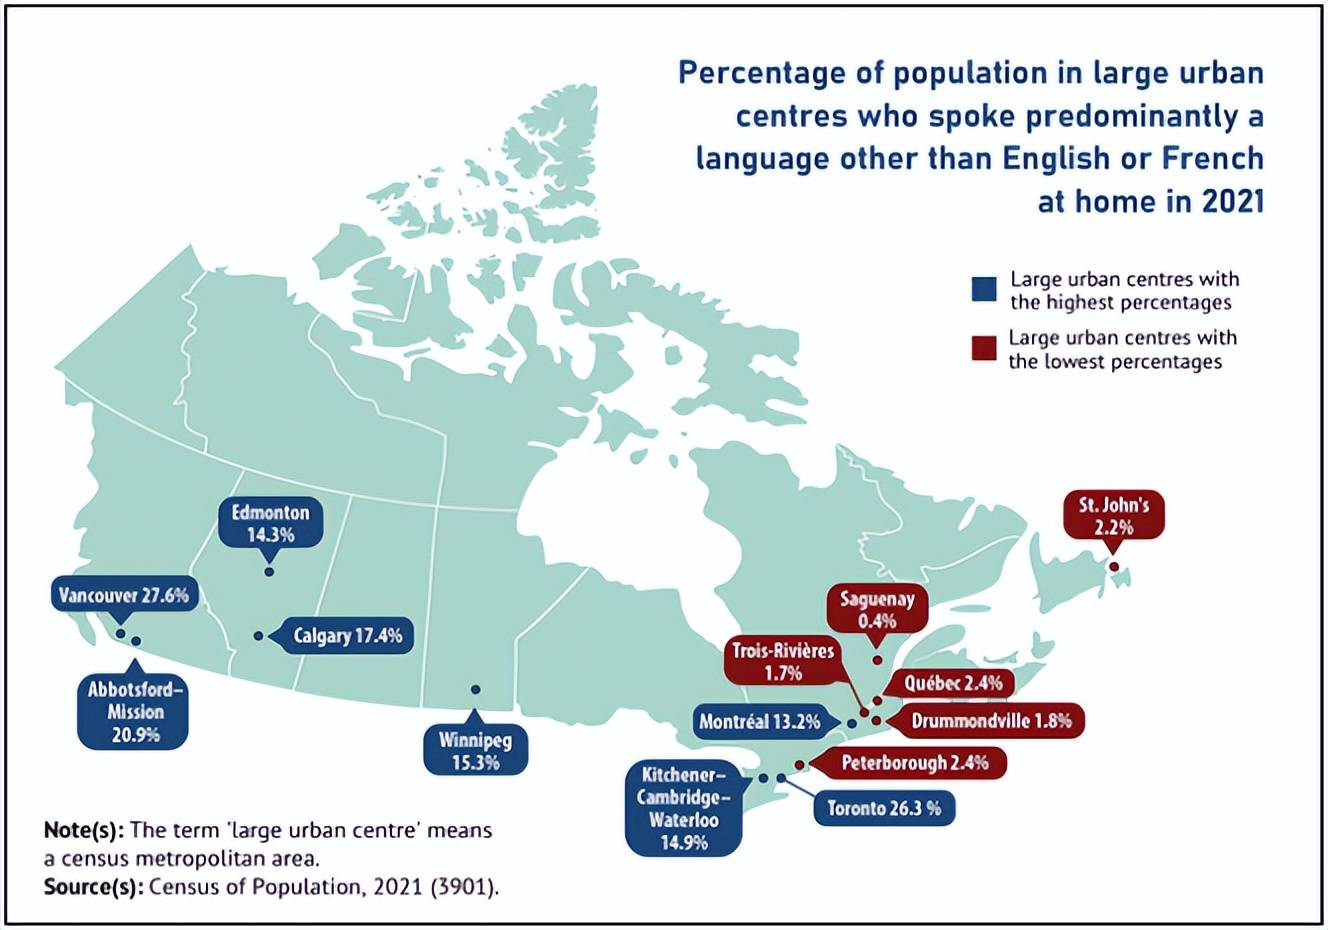 statistics canada报告称,在家主要说英语或法语以外语言的加拿大人